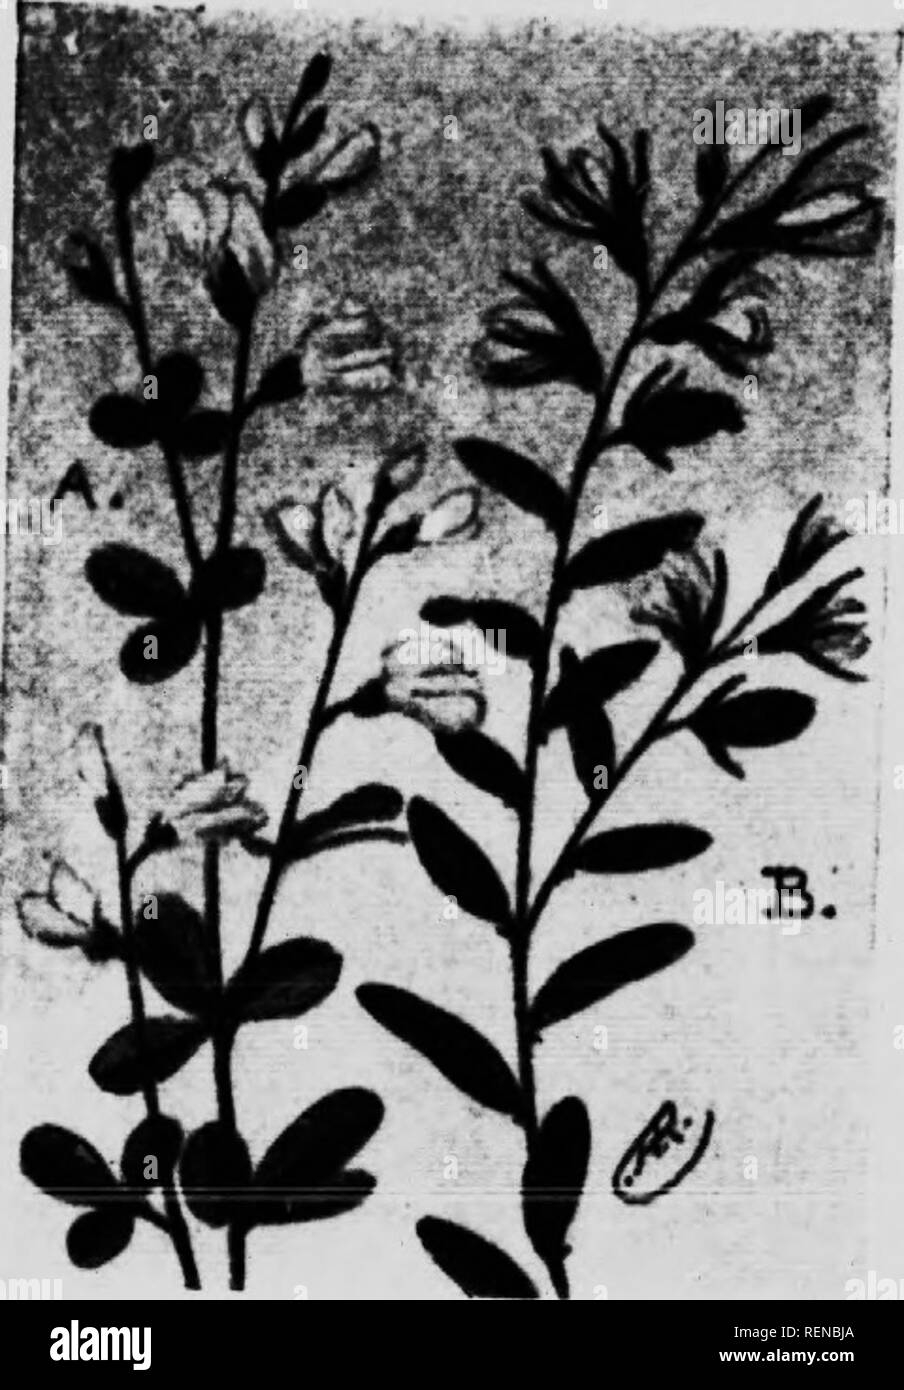 . Flower guide [microform] : wild flowers east of the Rockies. Flowers; Fleurs; Botanique; Botany. (A) Wii.r. ^smuo (liaplMa ilnrlnrh) is a vorv l&gt;i:inc-liy and vcrv Ims iv 1â,,|, -riii. st..,,. .li,.-i ^ j.ft,,,. if I.,,,,... ,â ] â . '' '&quot; l'IVI(I&lt;'&lt; SOIlll ilt.i It Icaxi, the fri(Miiul. th,. sl,.ii,li.r linuiclilrts ,.v t.'n. in- ,.,|ââllv in all ,lin.,.tiââs. Tlâ. !,.n ?V- th, .'. rim rââts of il,l Iâ,|i â,â âââ| , . ,, 'â &quot;''7&quot; ''â ;::â¢.,&quot;/ &quot; I&quot;&quot;&quot;- 'l&quot;&quot;'it.v, ...., alsâ lâ. ,a I .,ââ ;]. -Manu. tâ M,ââ,.sâta. llmv,.,-!,,;; frâi Stock Photo